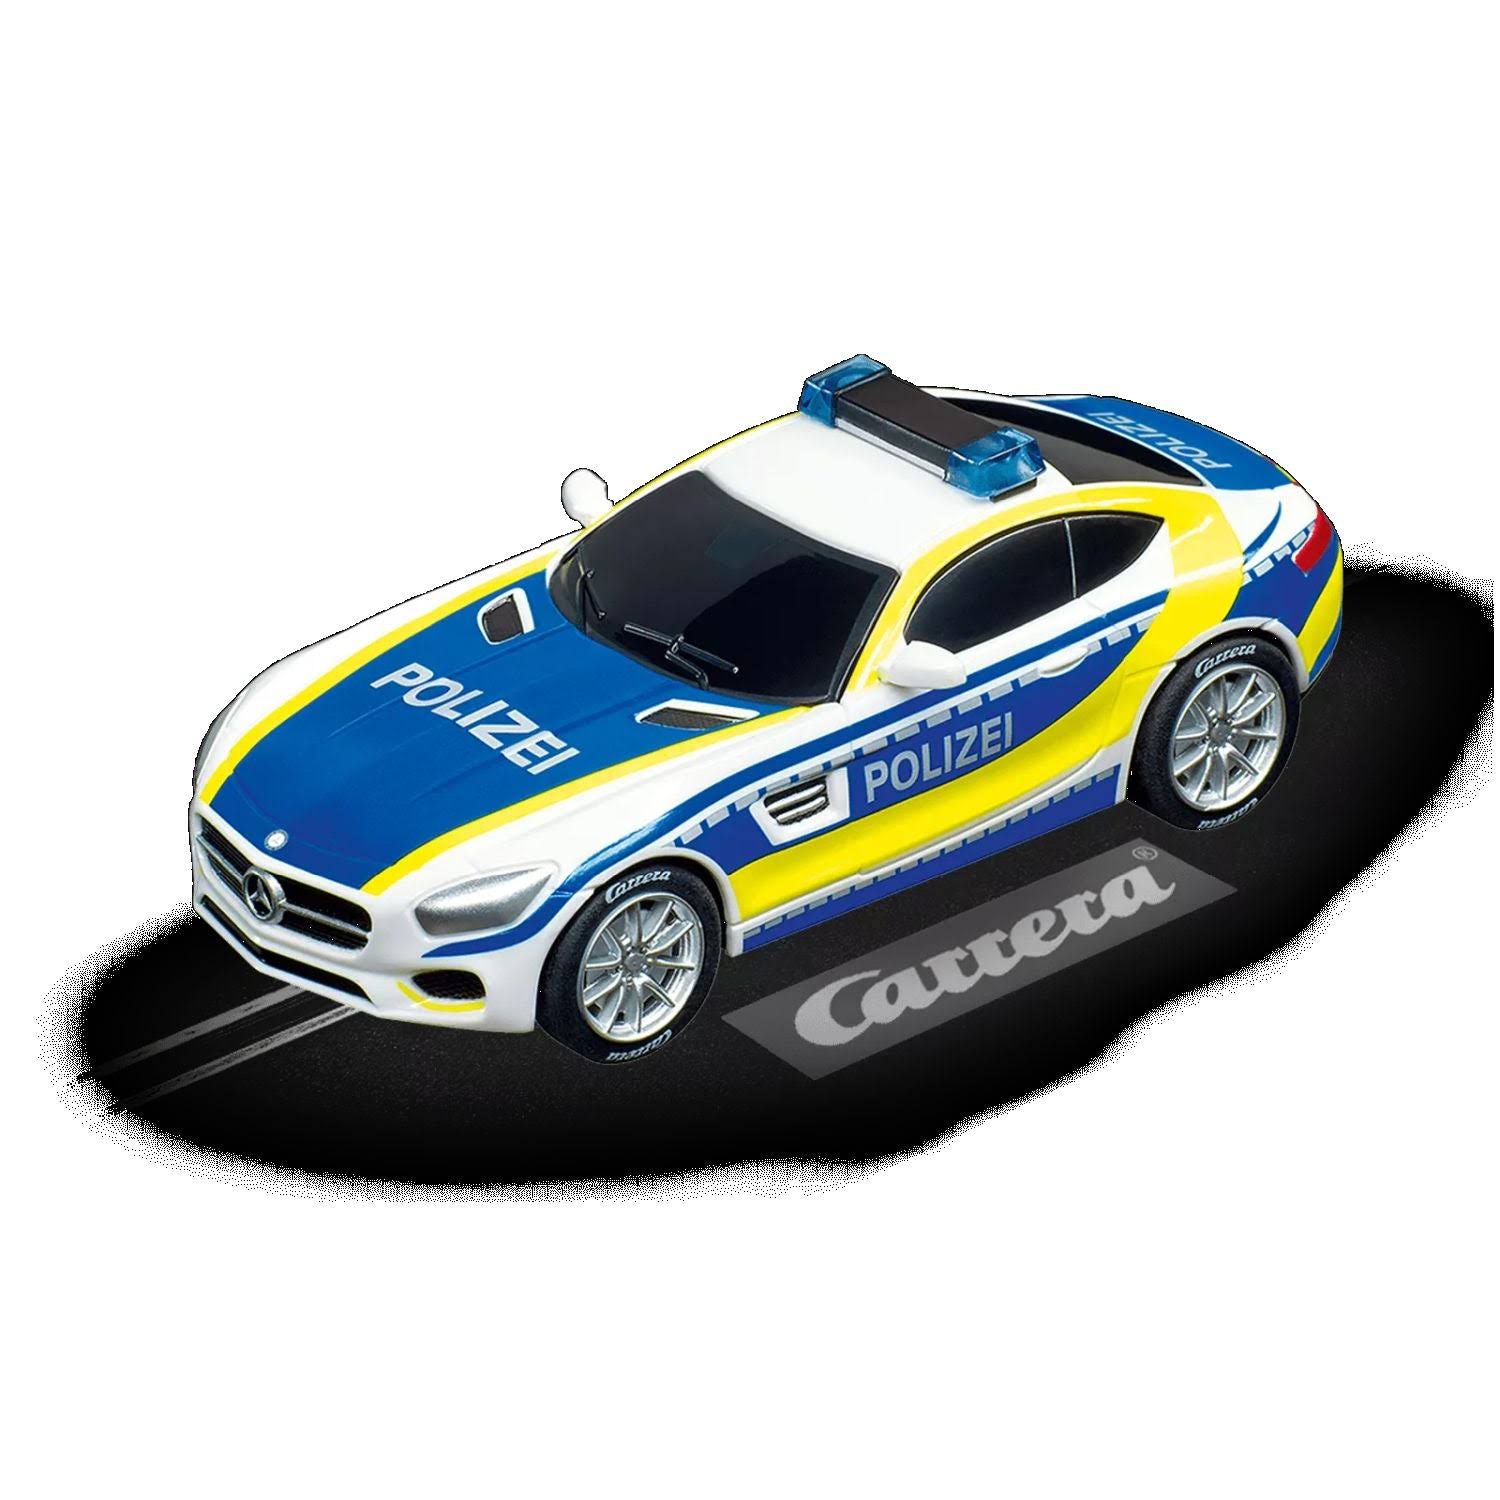 Carrera Mercedes AMG GT Coupe Polizei Electric Slot Car